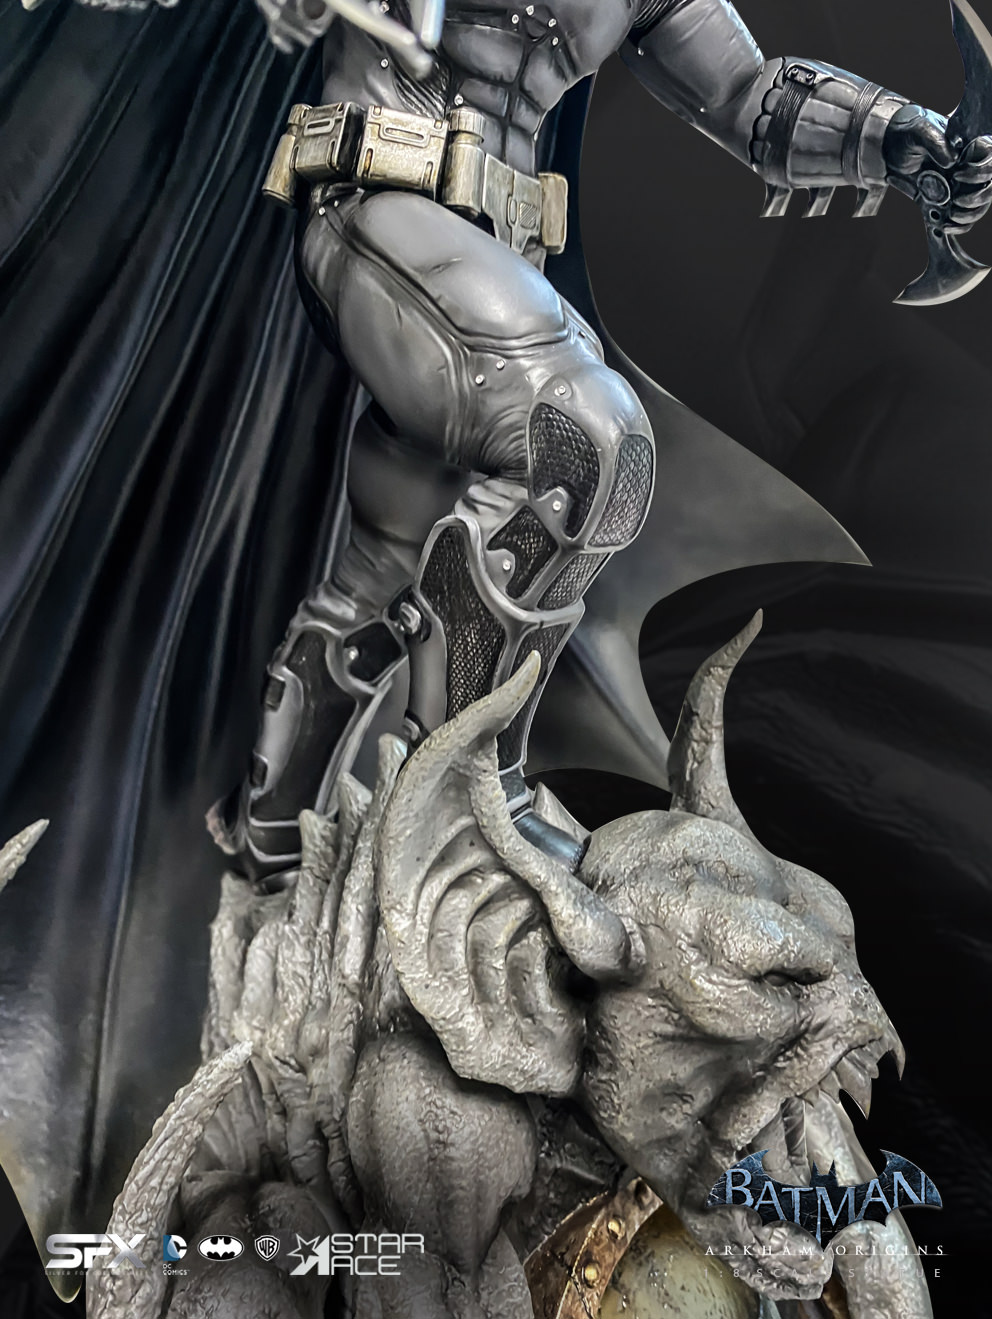 Batman Arkham Origins Collector Edition (Prototype Shown) View 10